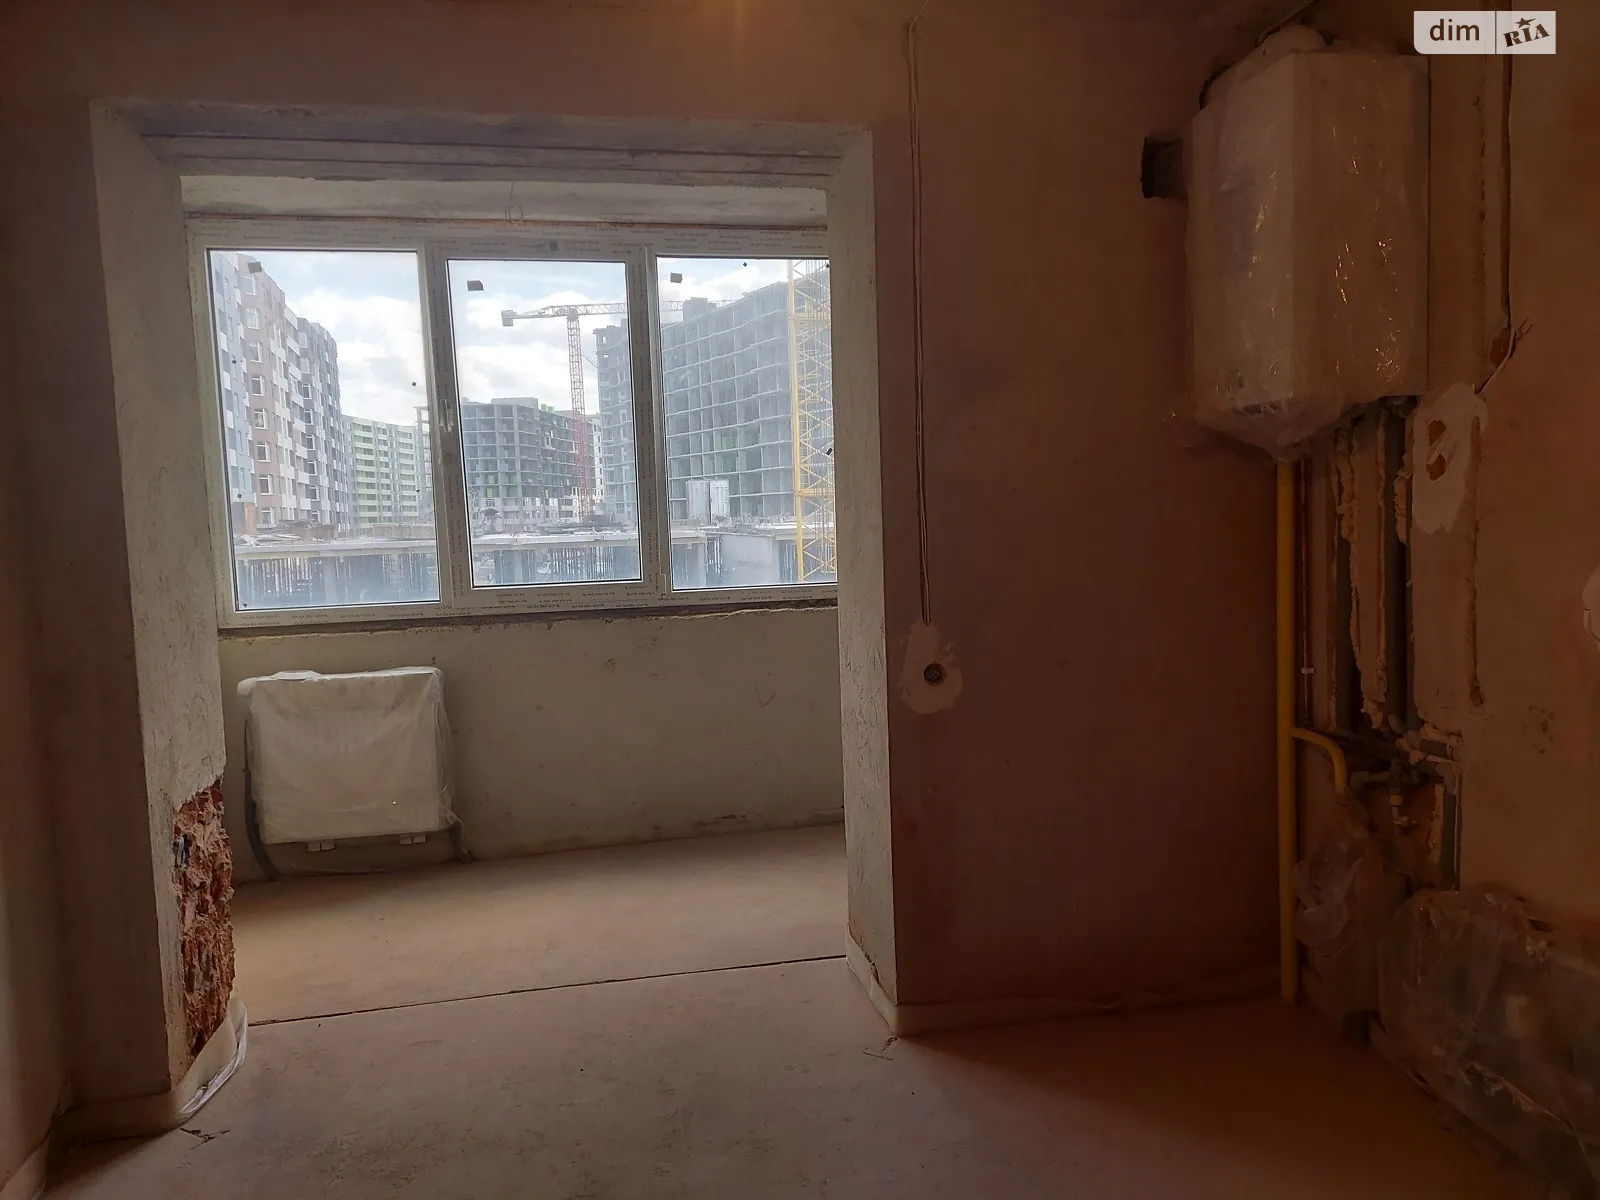 1-кімнатна квартира 44.1 кв. м у Тернополі, цена: 32500 $ - фото 1